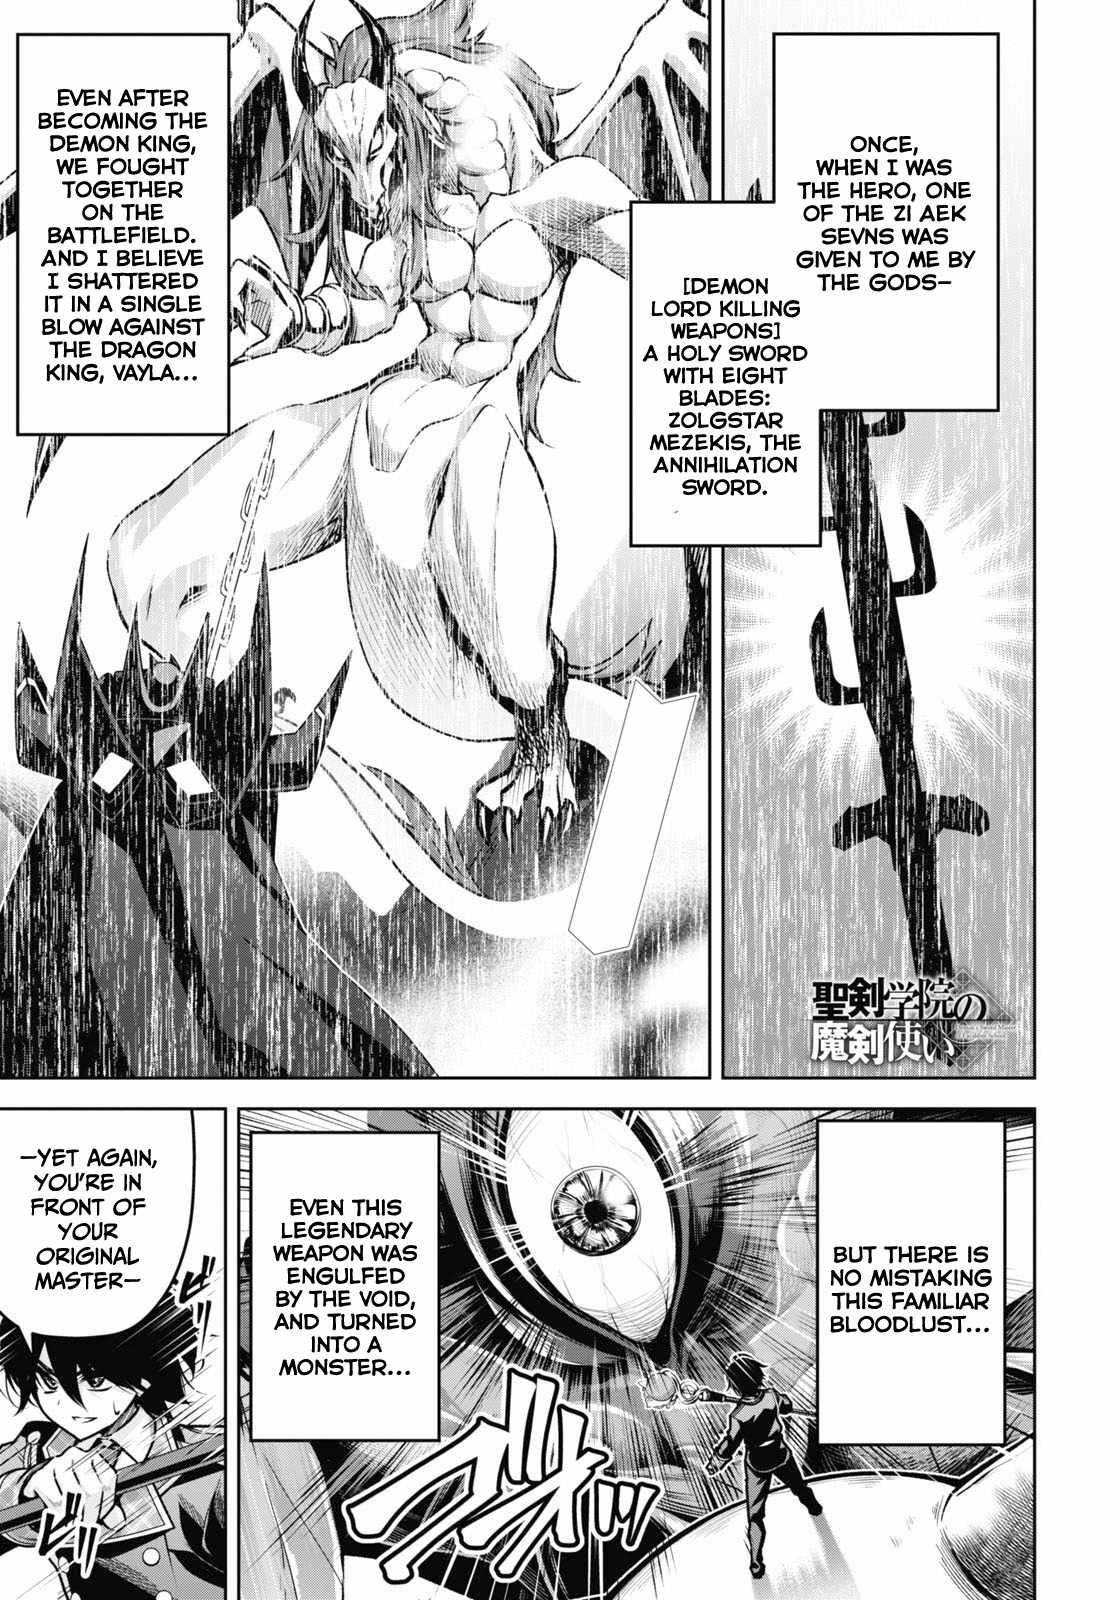 Demon's Sword Master Of Excalibur School - Page 2